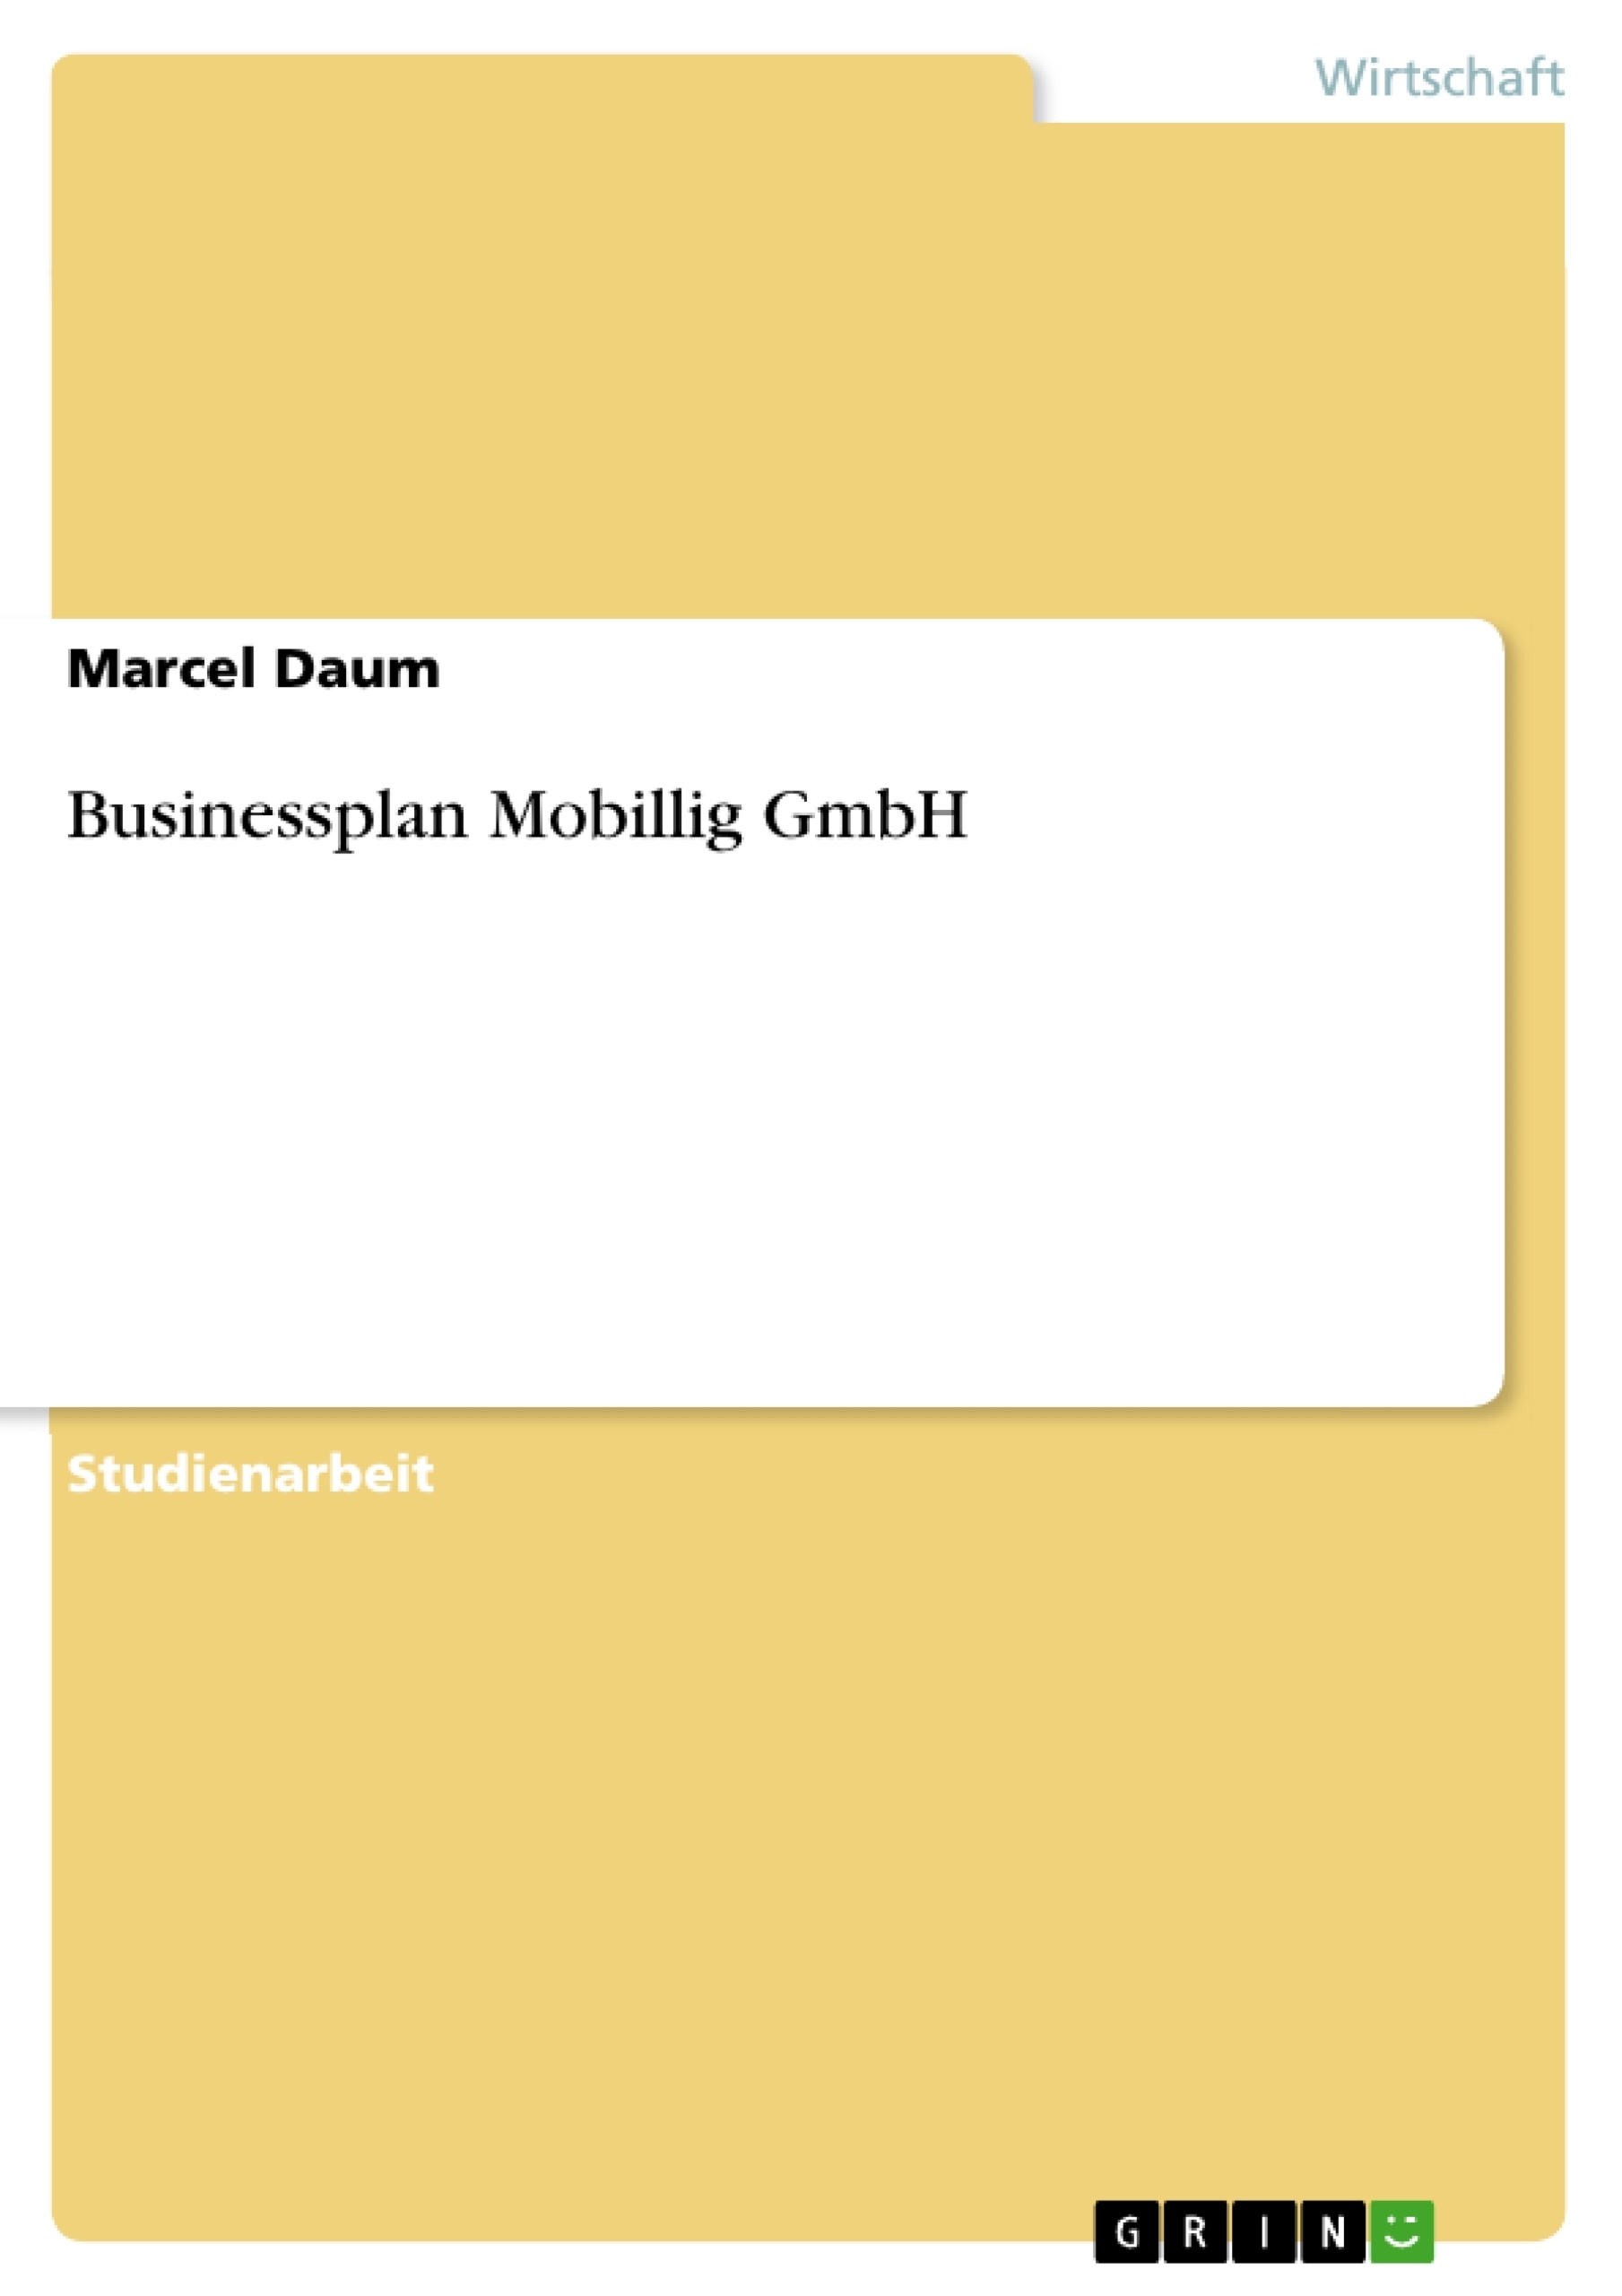 Title: Businessplan Mobillig GmbH